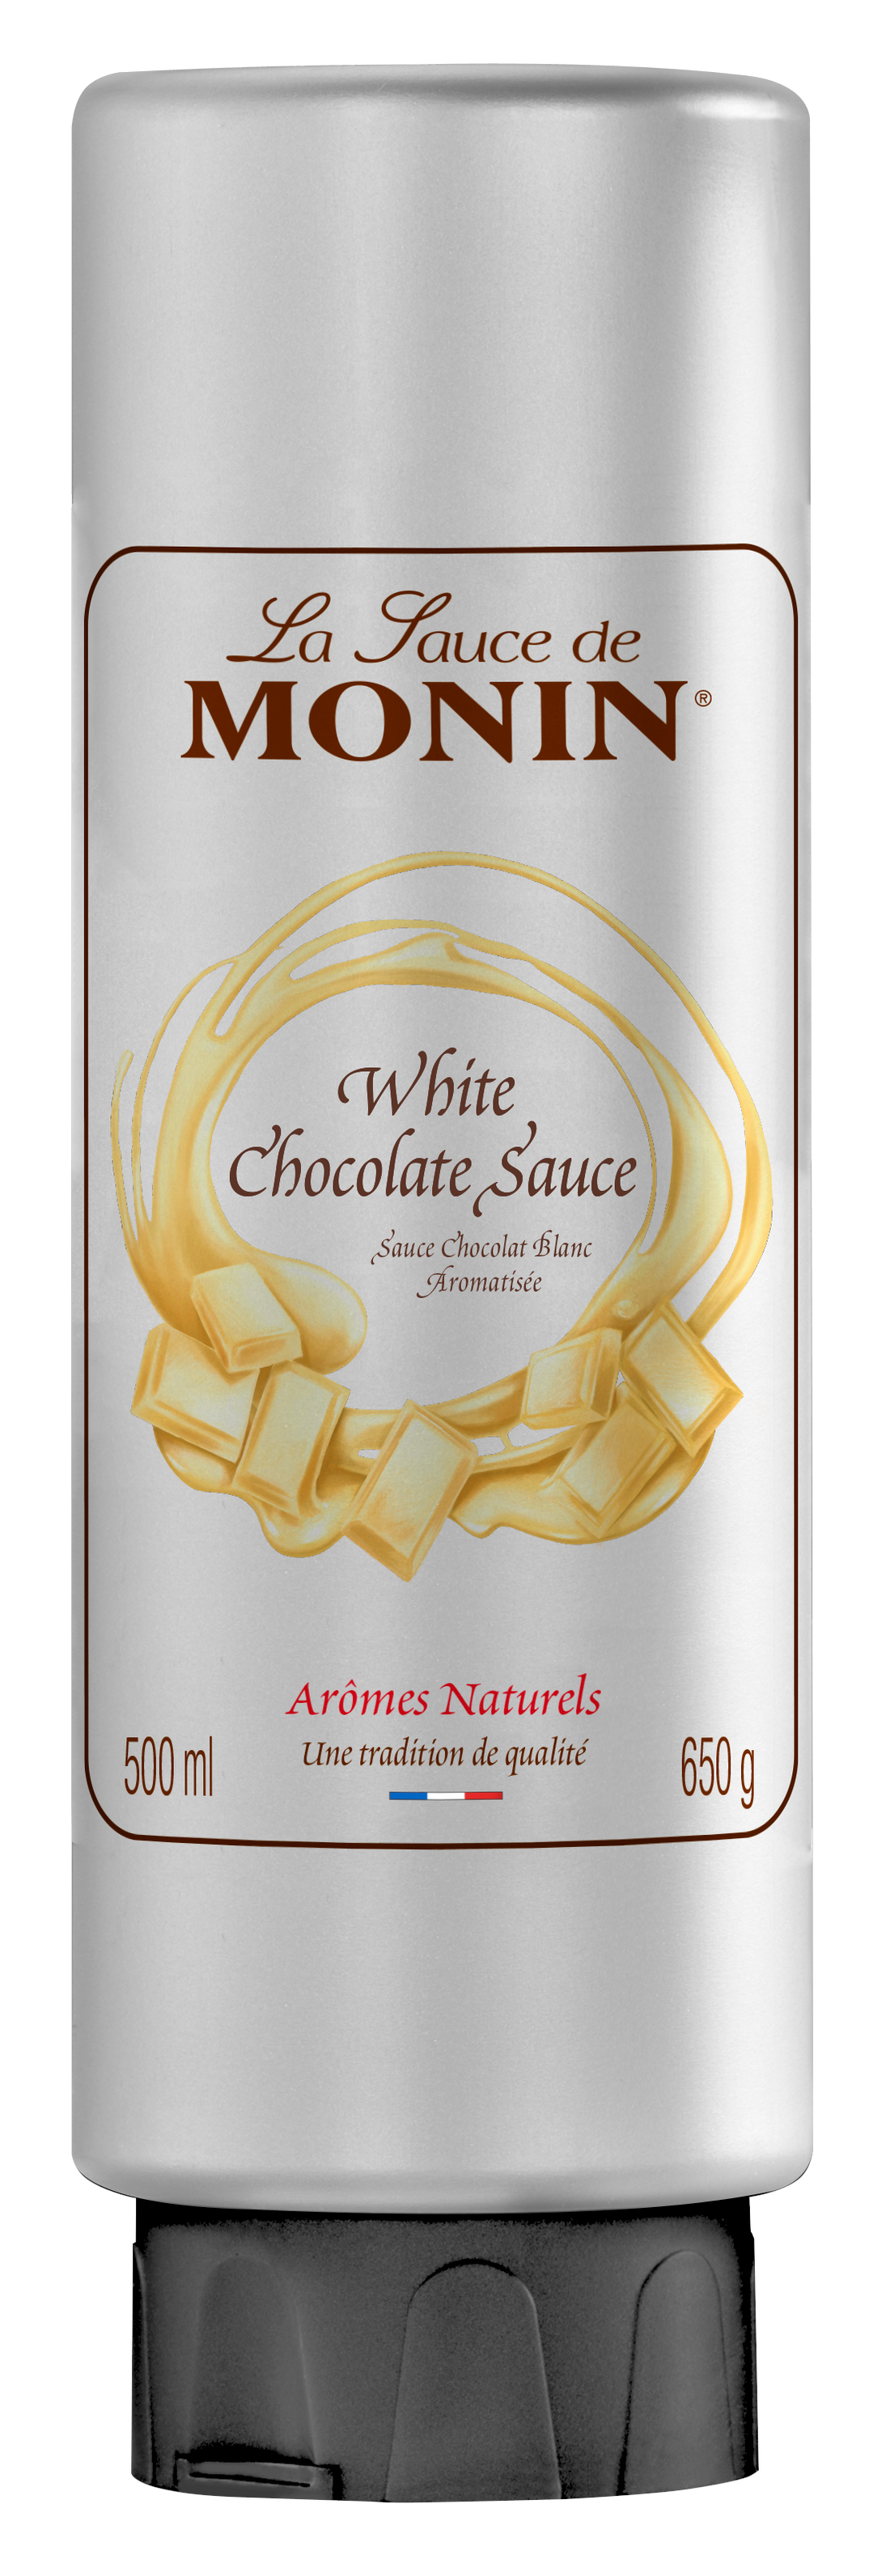 Monin Chocolat Blanc (White Chocolate) Syrup 70cl